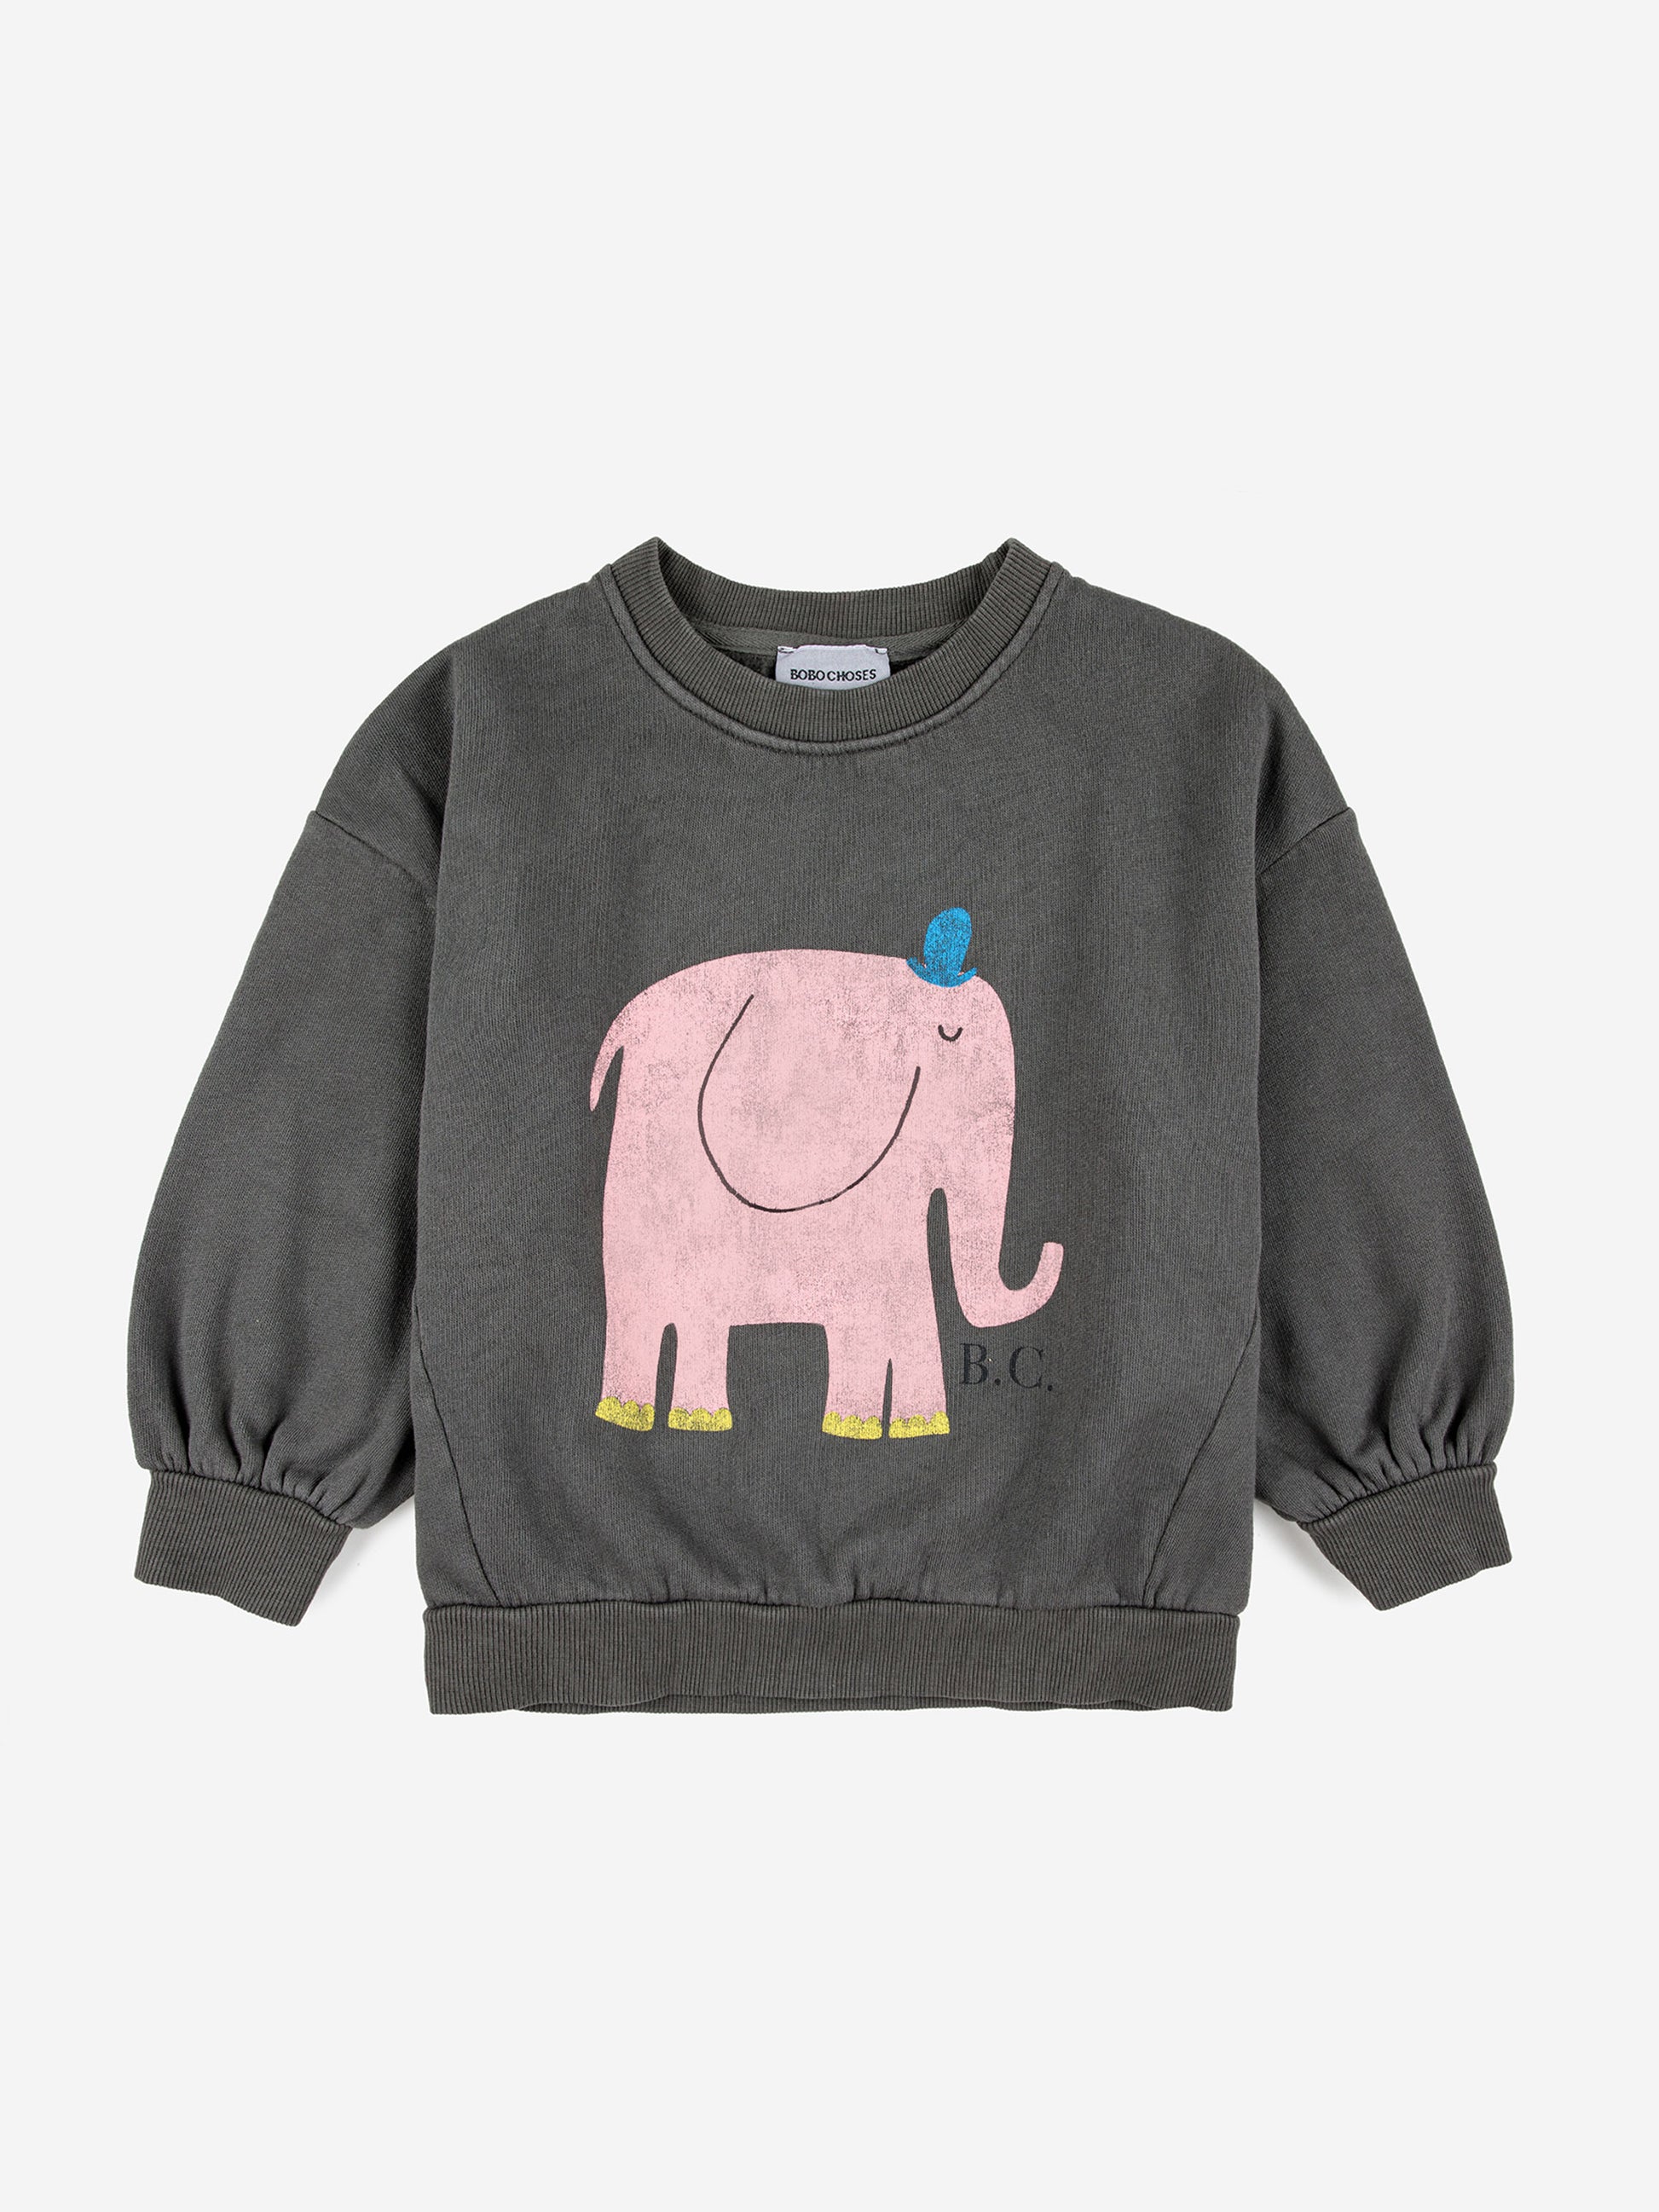 Elephant sweatshirt Bobo – Choses The